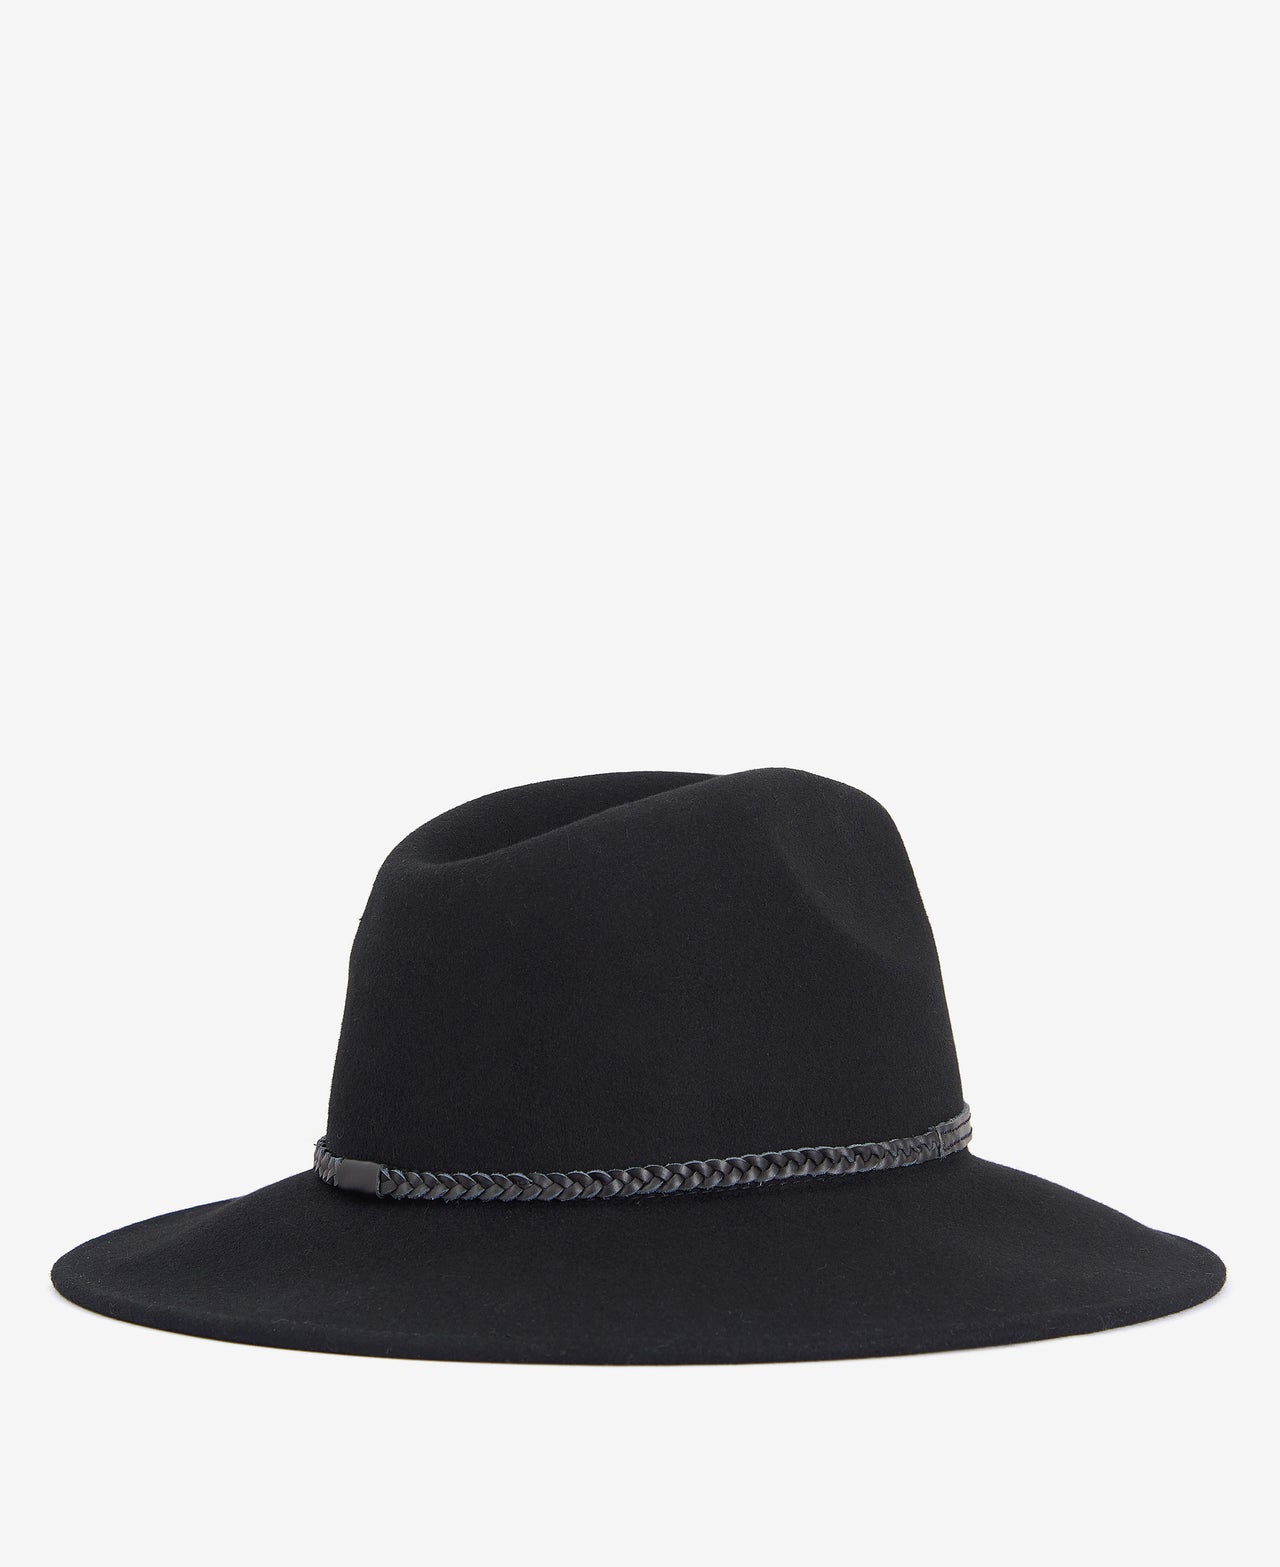 Barbour Tack Fedora Black Hat